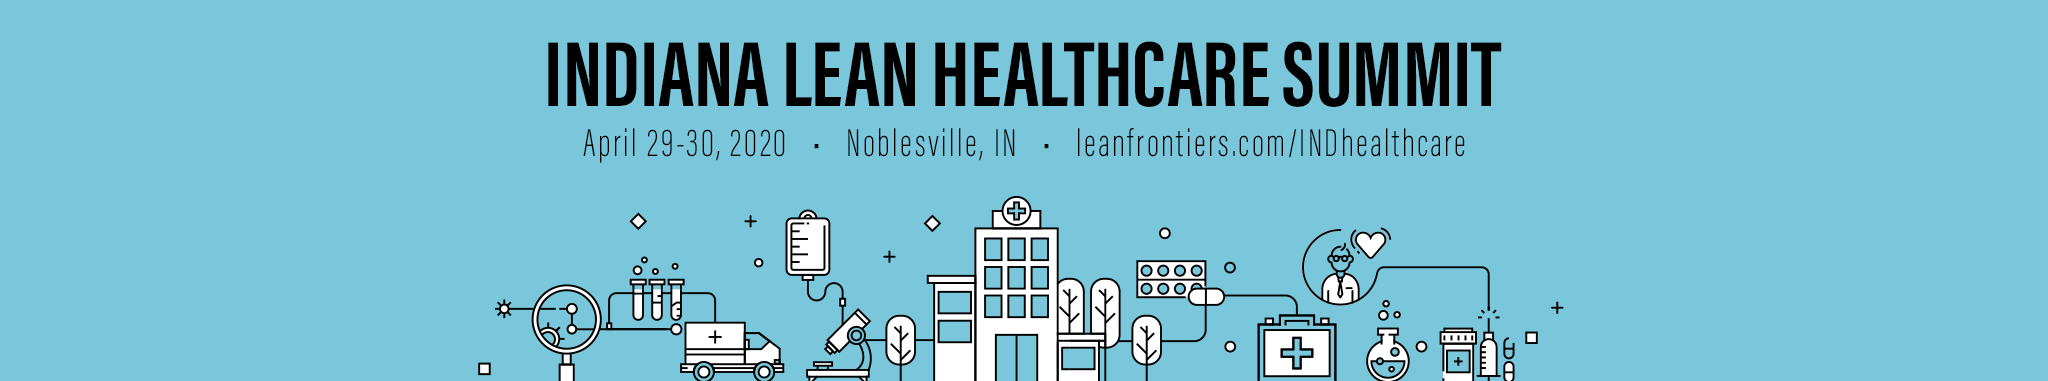 Indiana Lean Healthcare Summit 2020